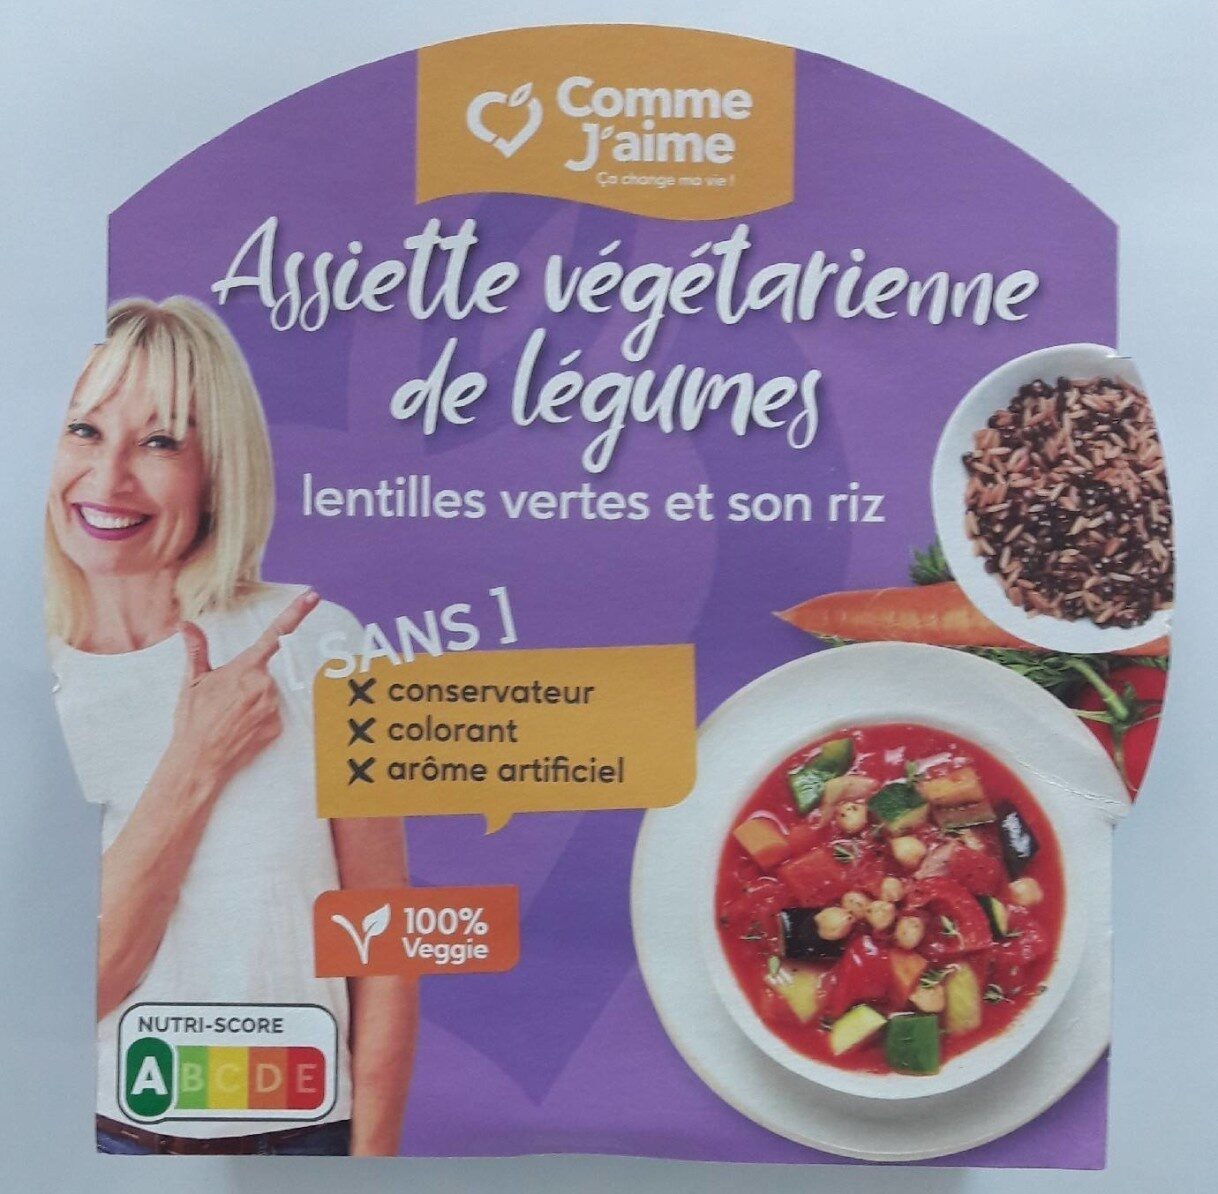 Assiette végétarienne - Produkt - fr